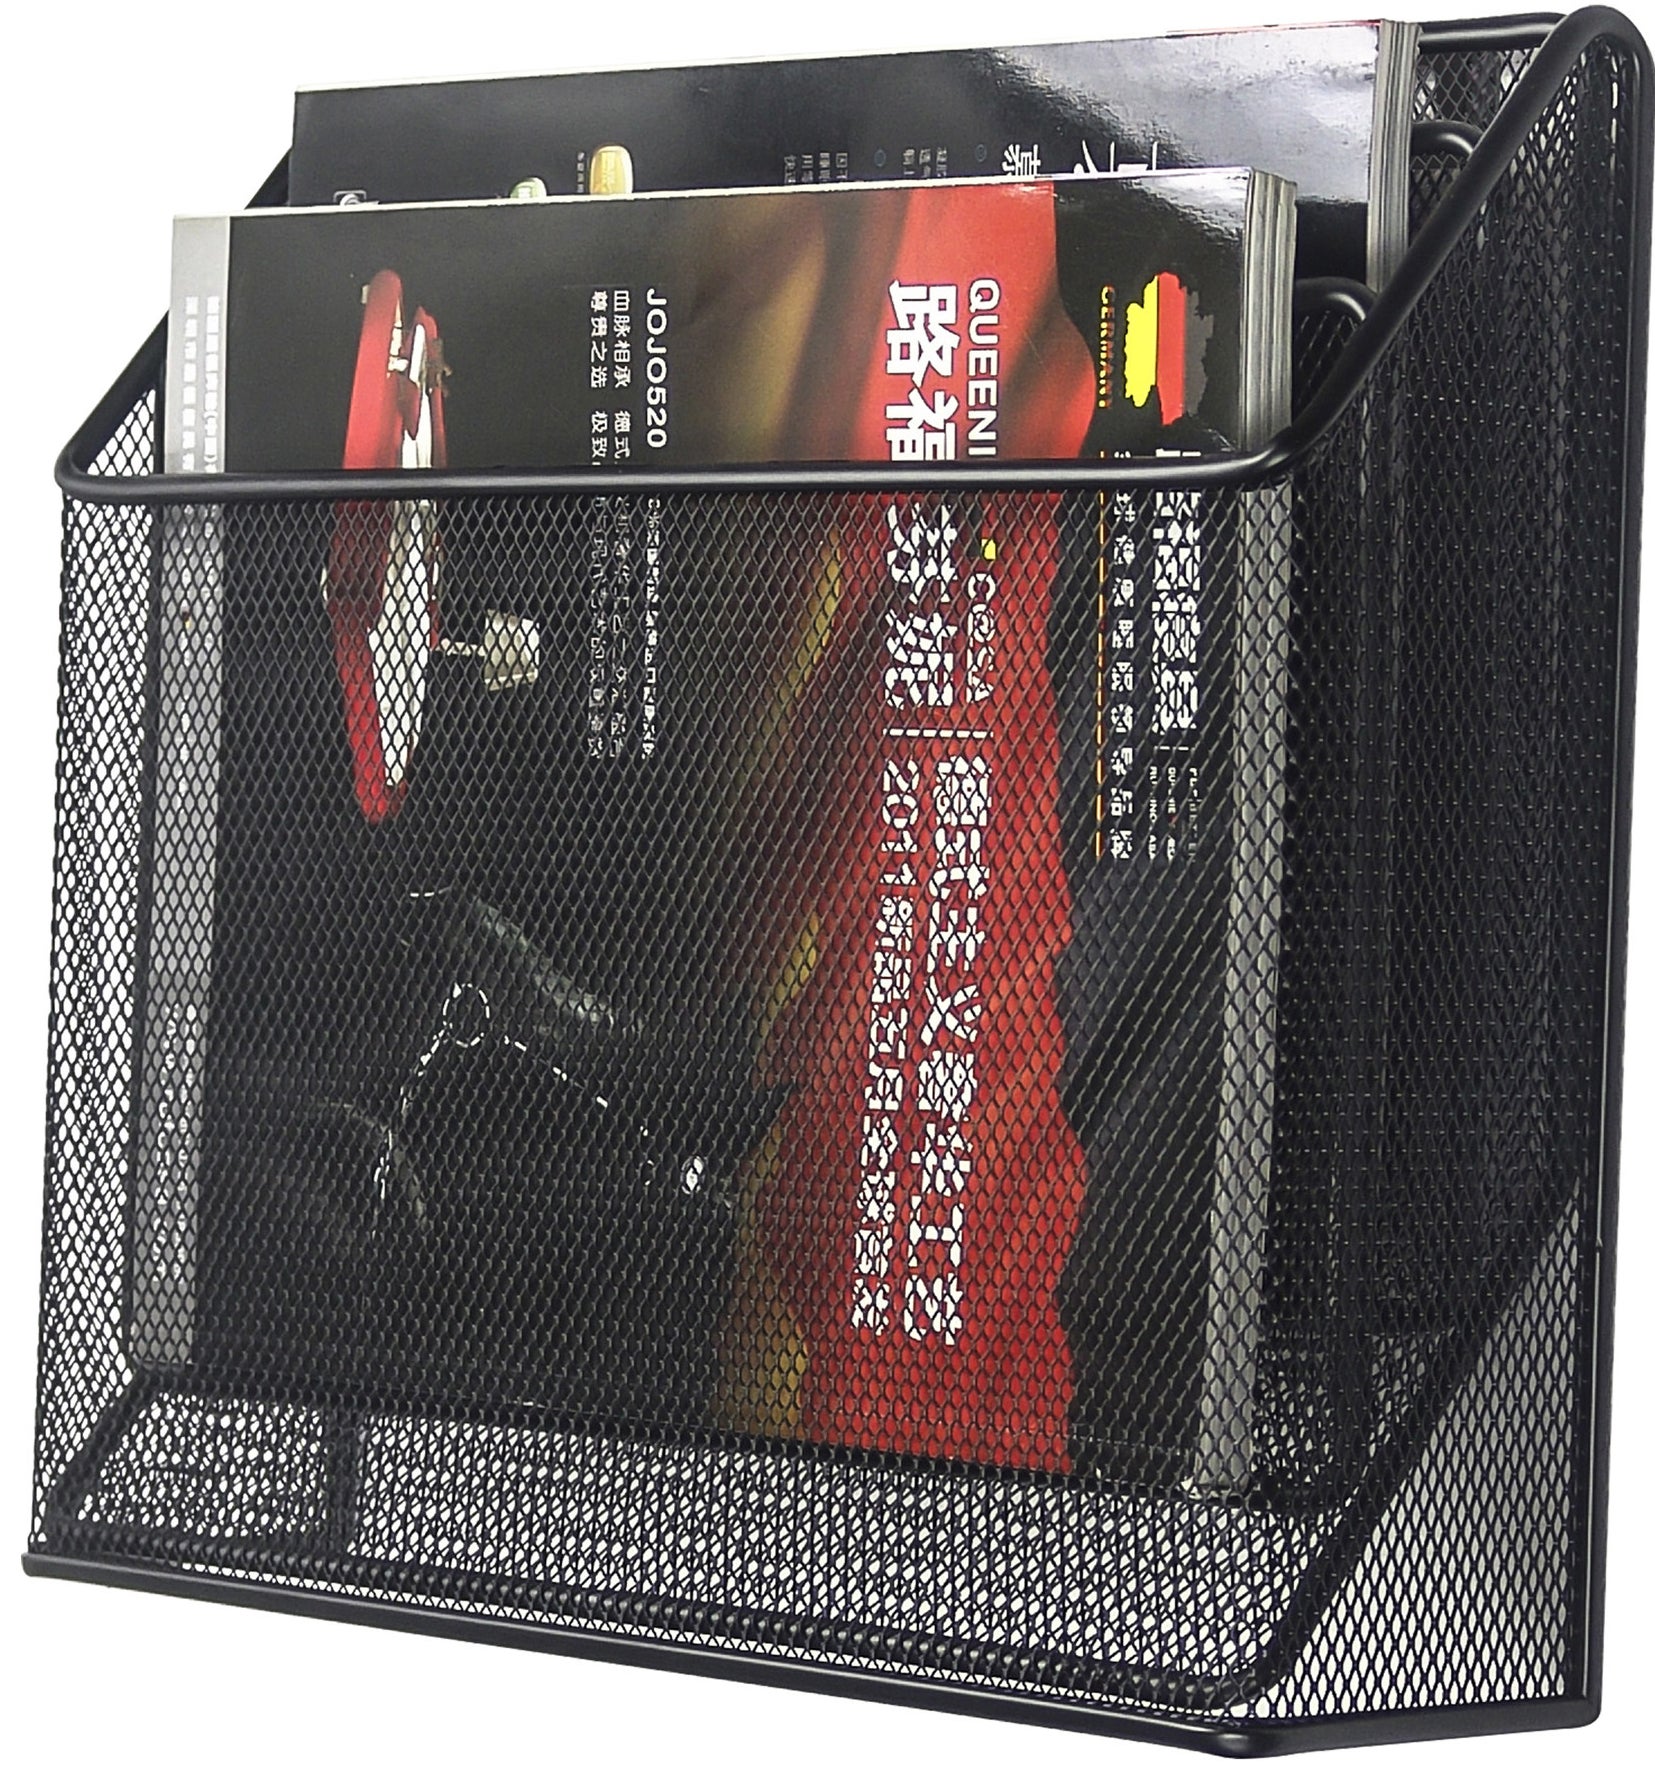 a black steel mesh desktop organizer containing a manual